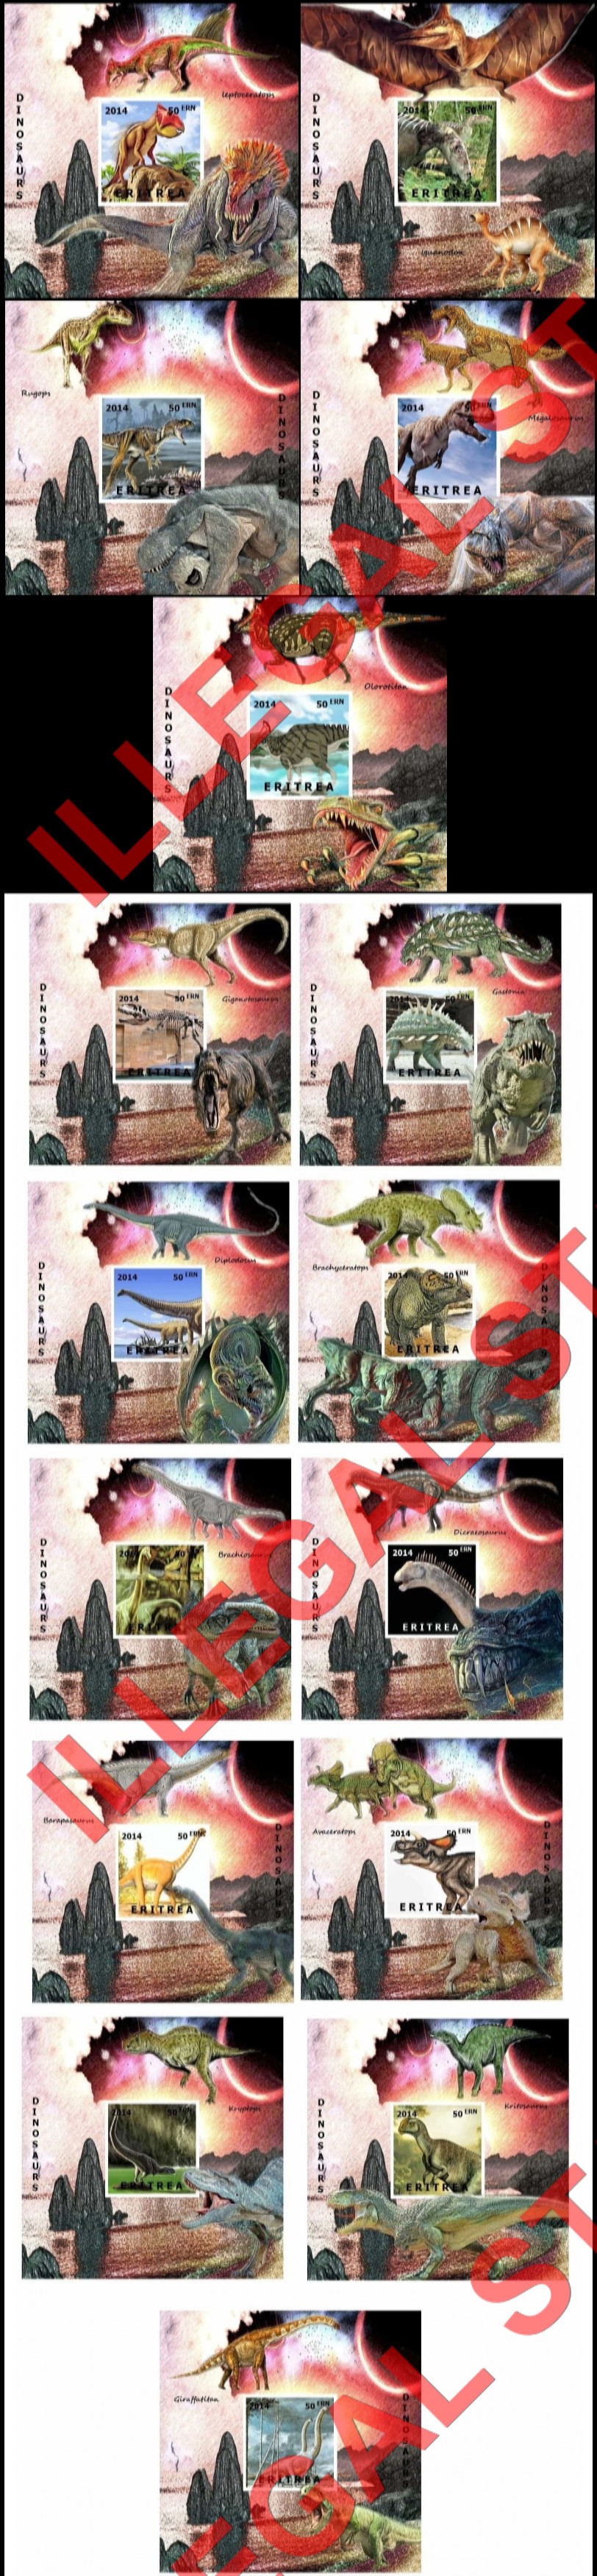 Eritrea 2014 Dinosaurs Counterfeit Illegal Stamp Souvenir Sheets of 1